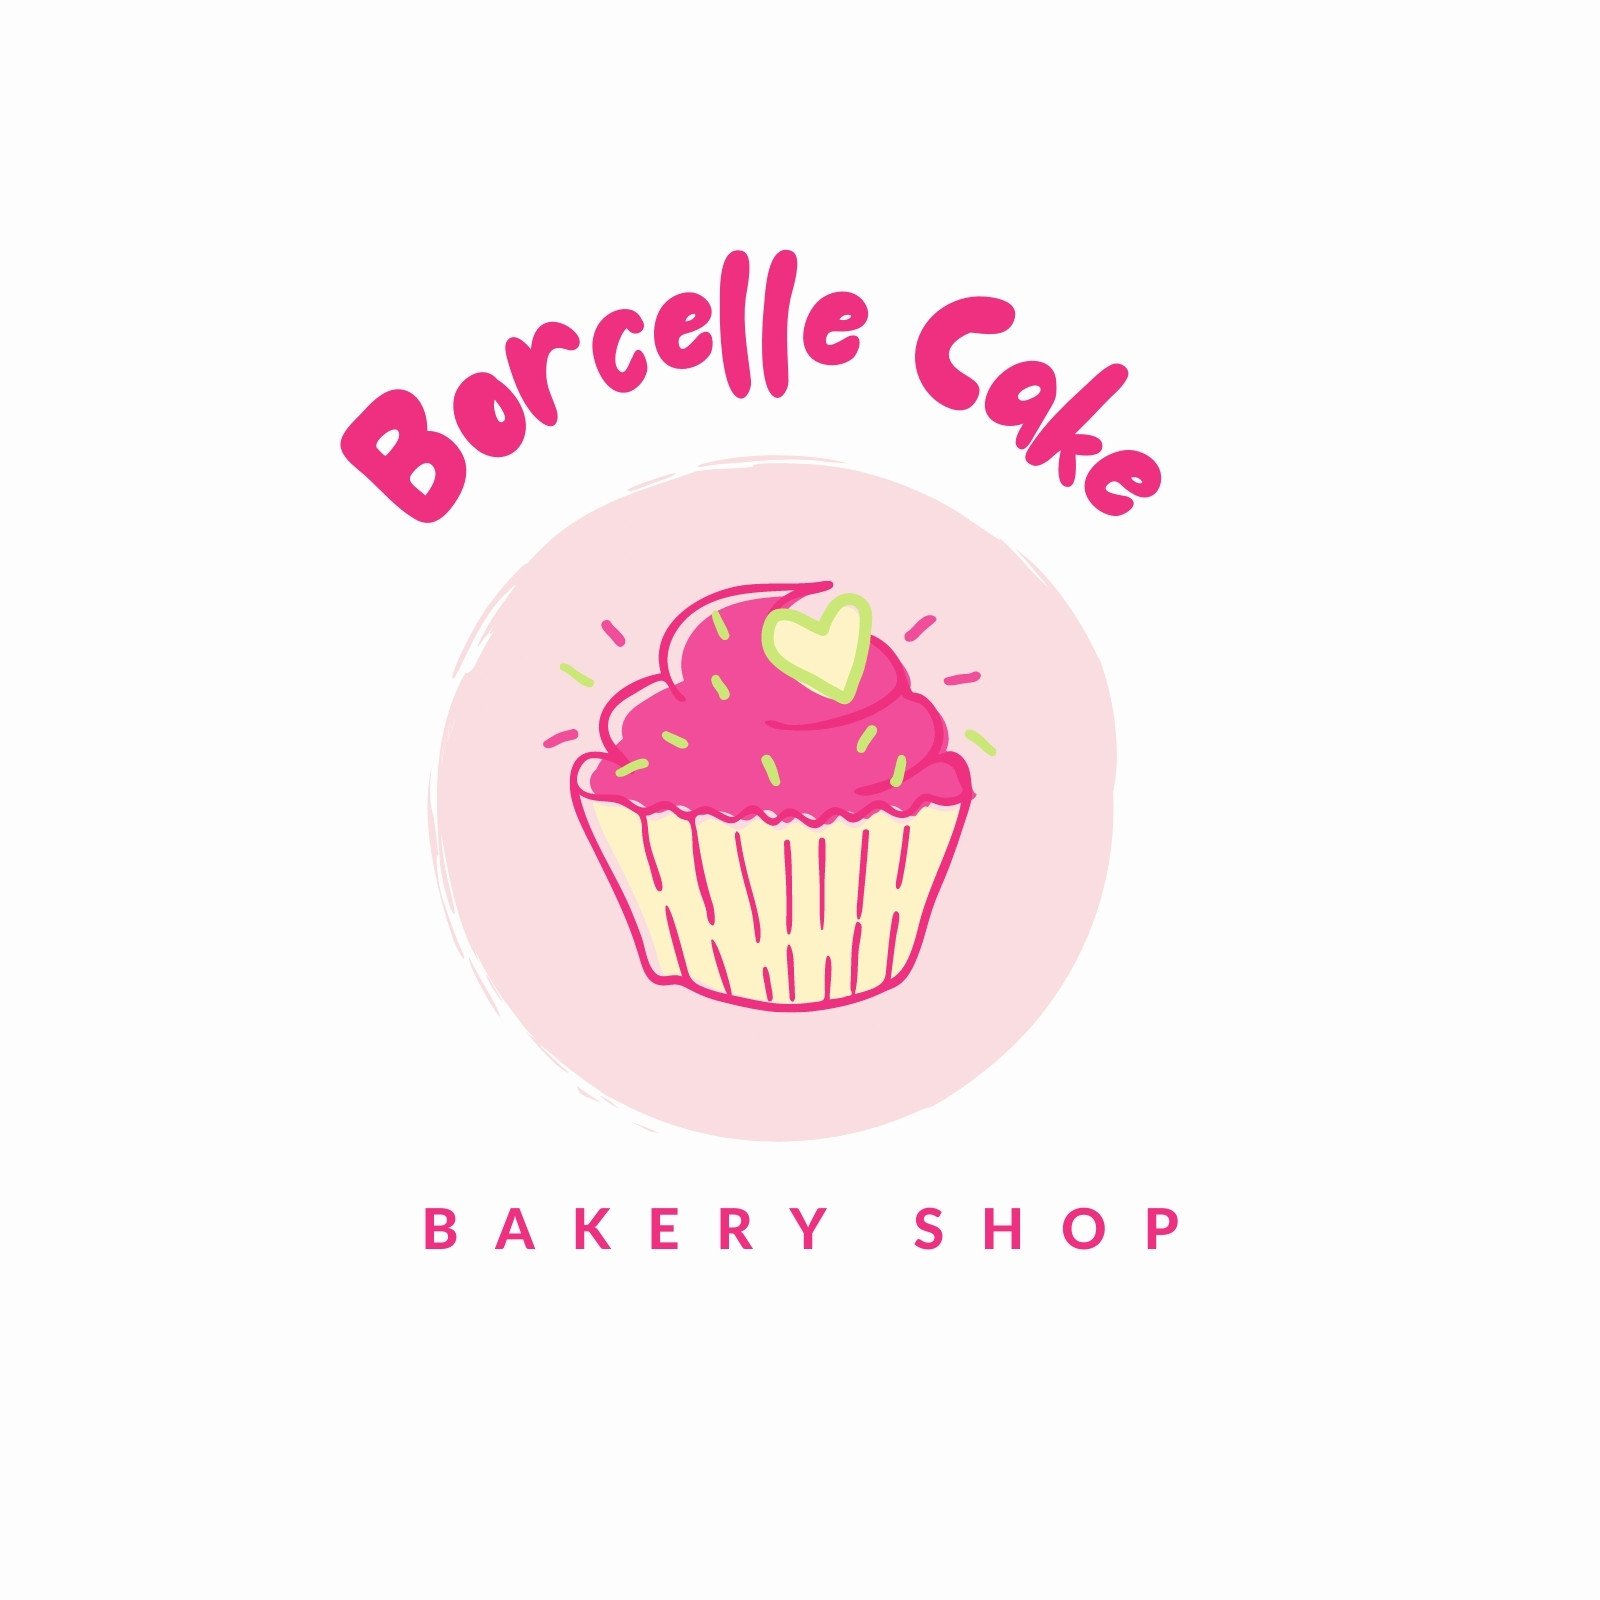 Free Hand Drawn Bakery Logo Maker - Create Your Own Cake Logos